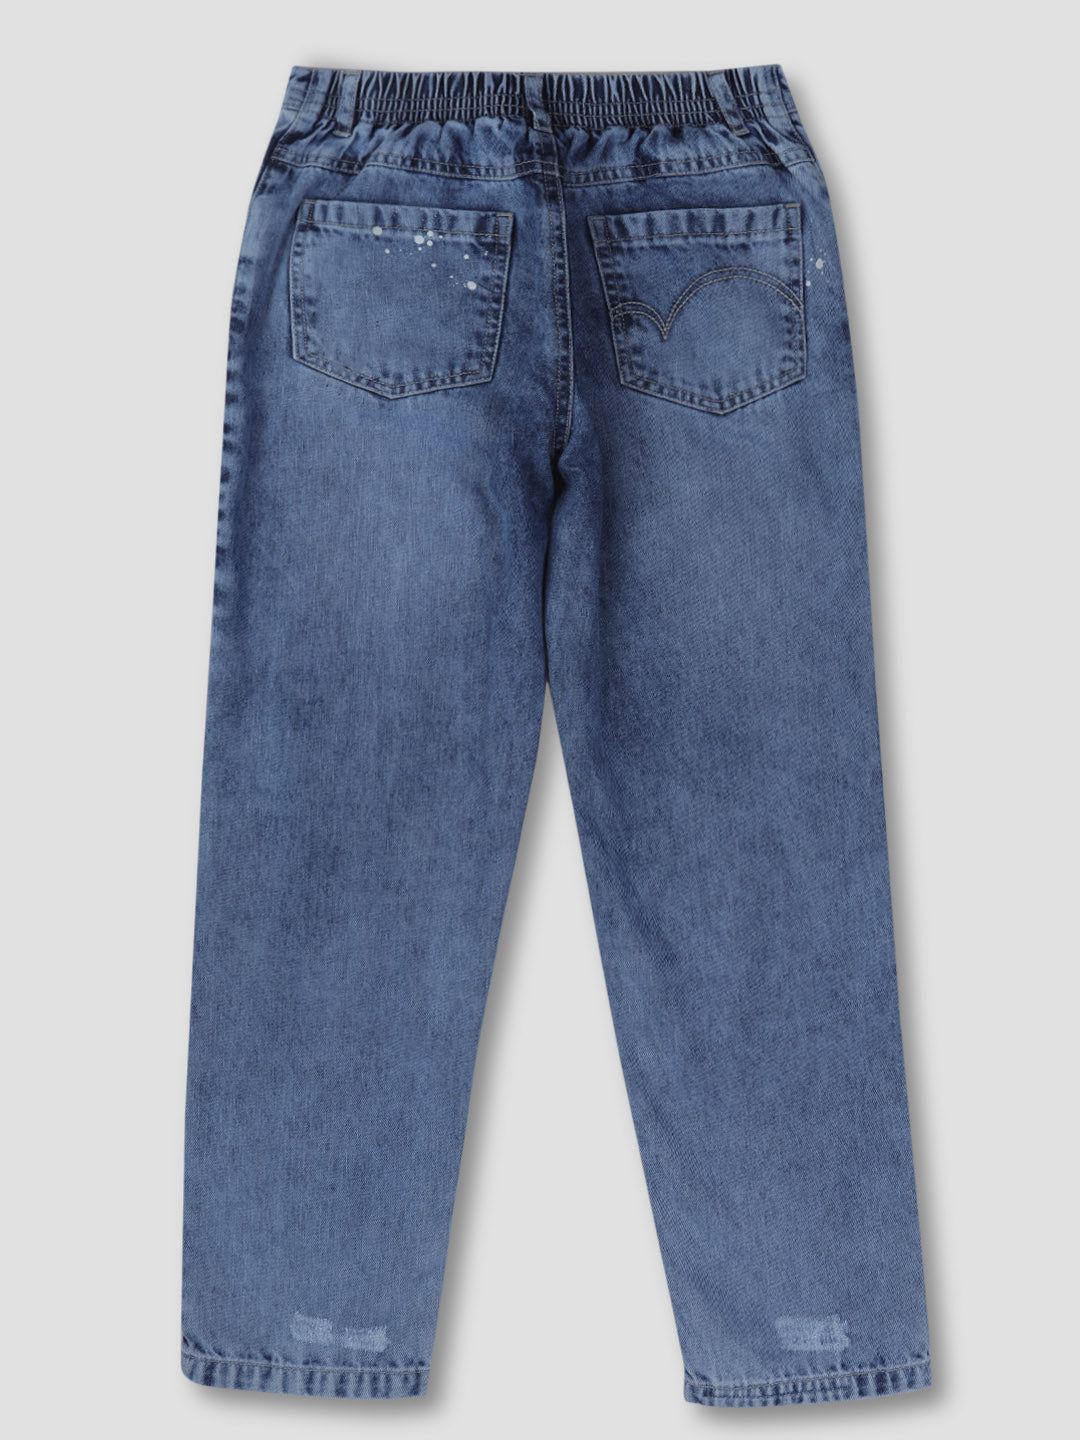 Boys Blue Printed Denim Jeans